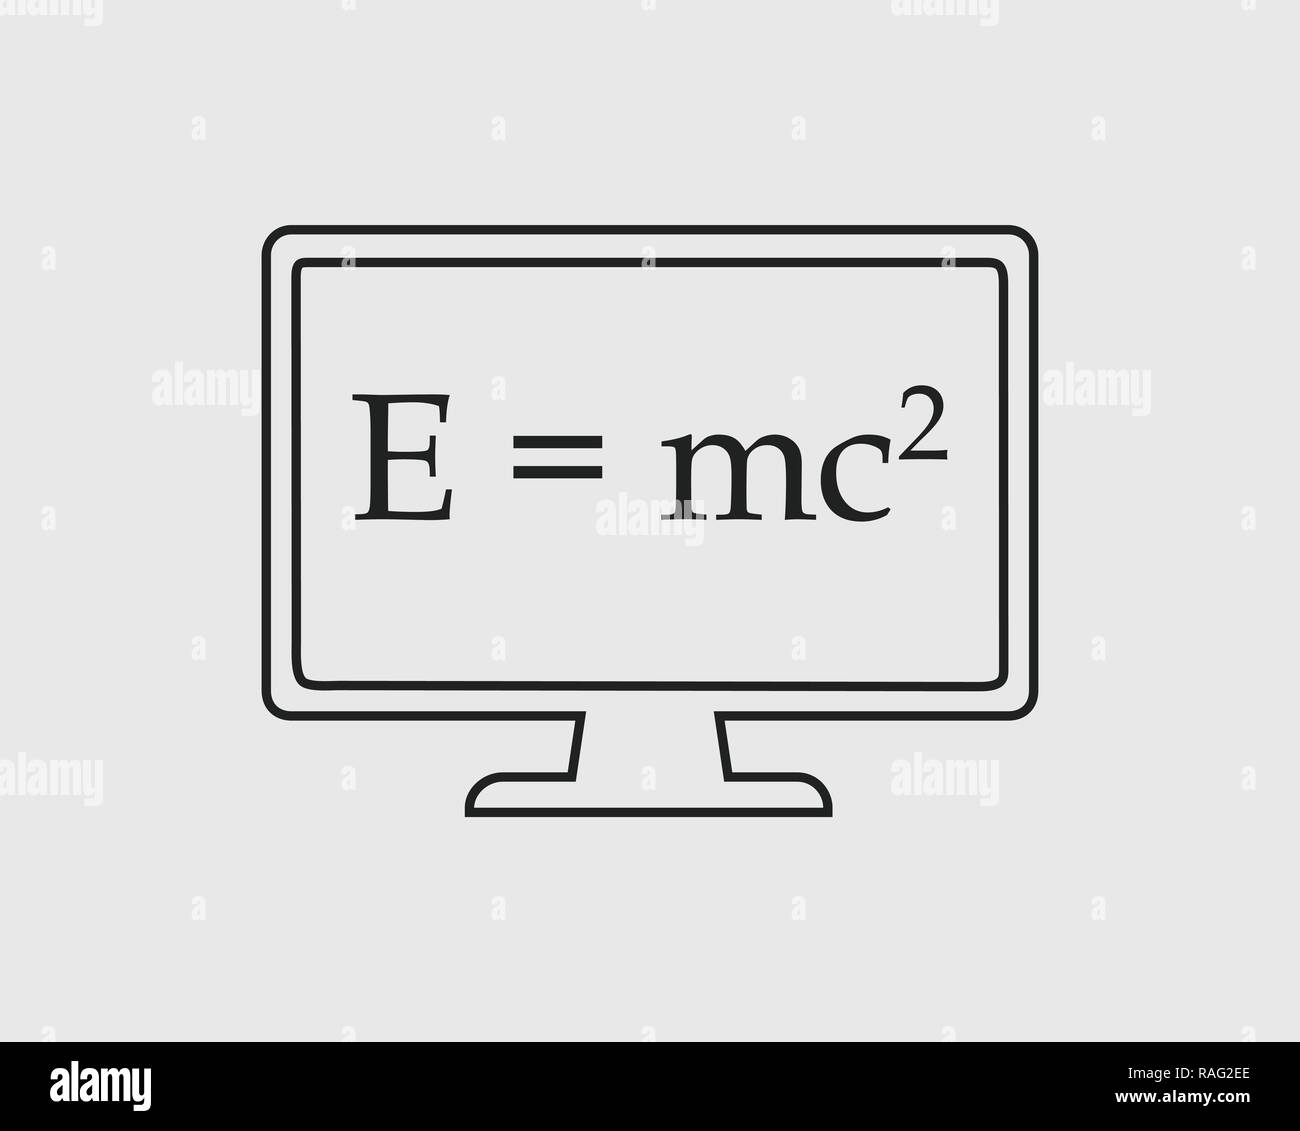 Physik Symbol Leitung. E=mc quadratische Gleichung auf Bildschirm Stock Vektor